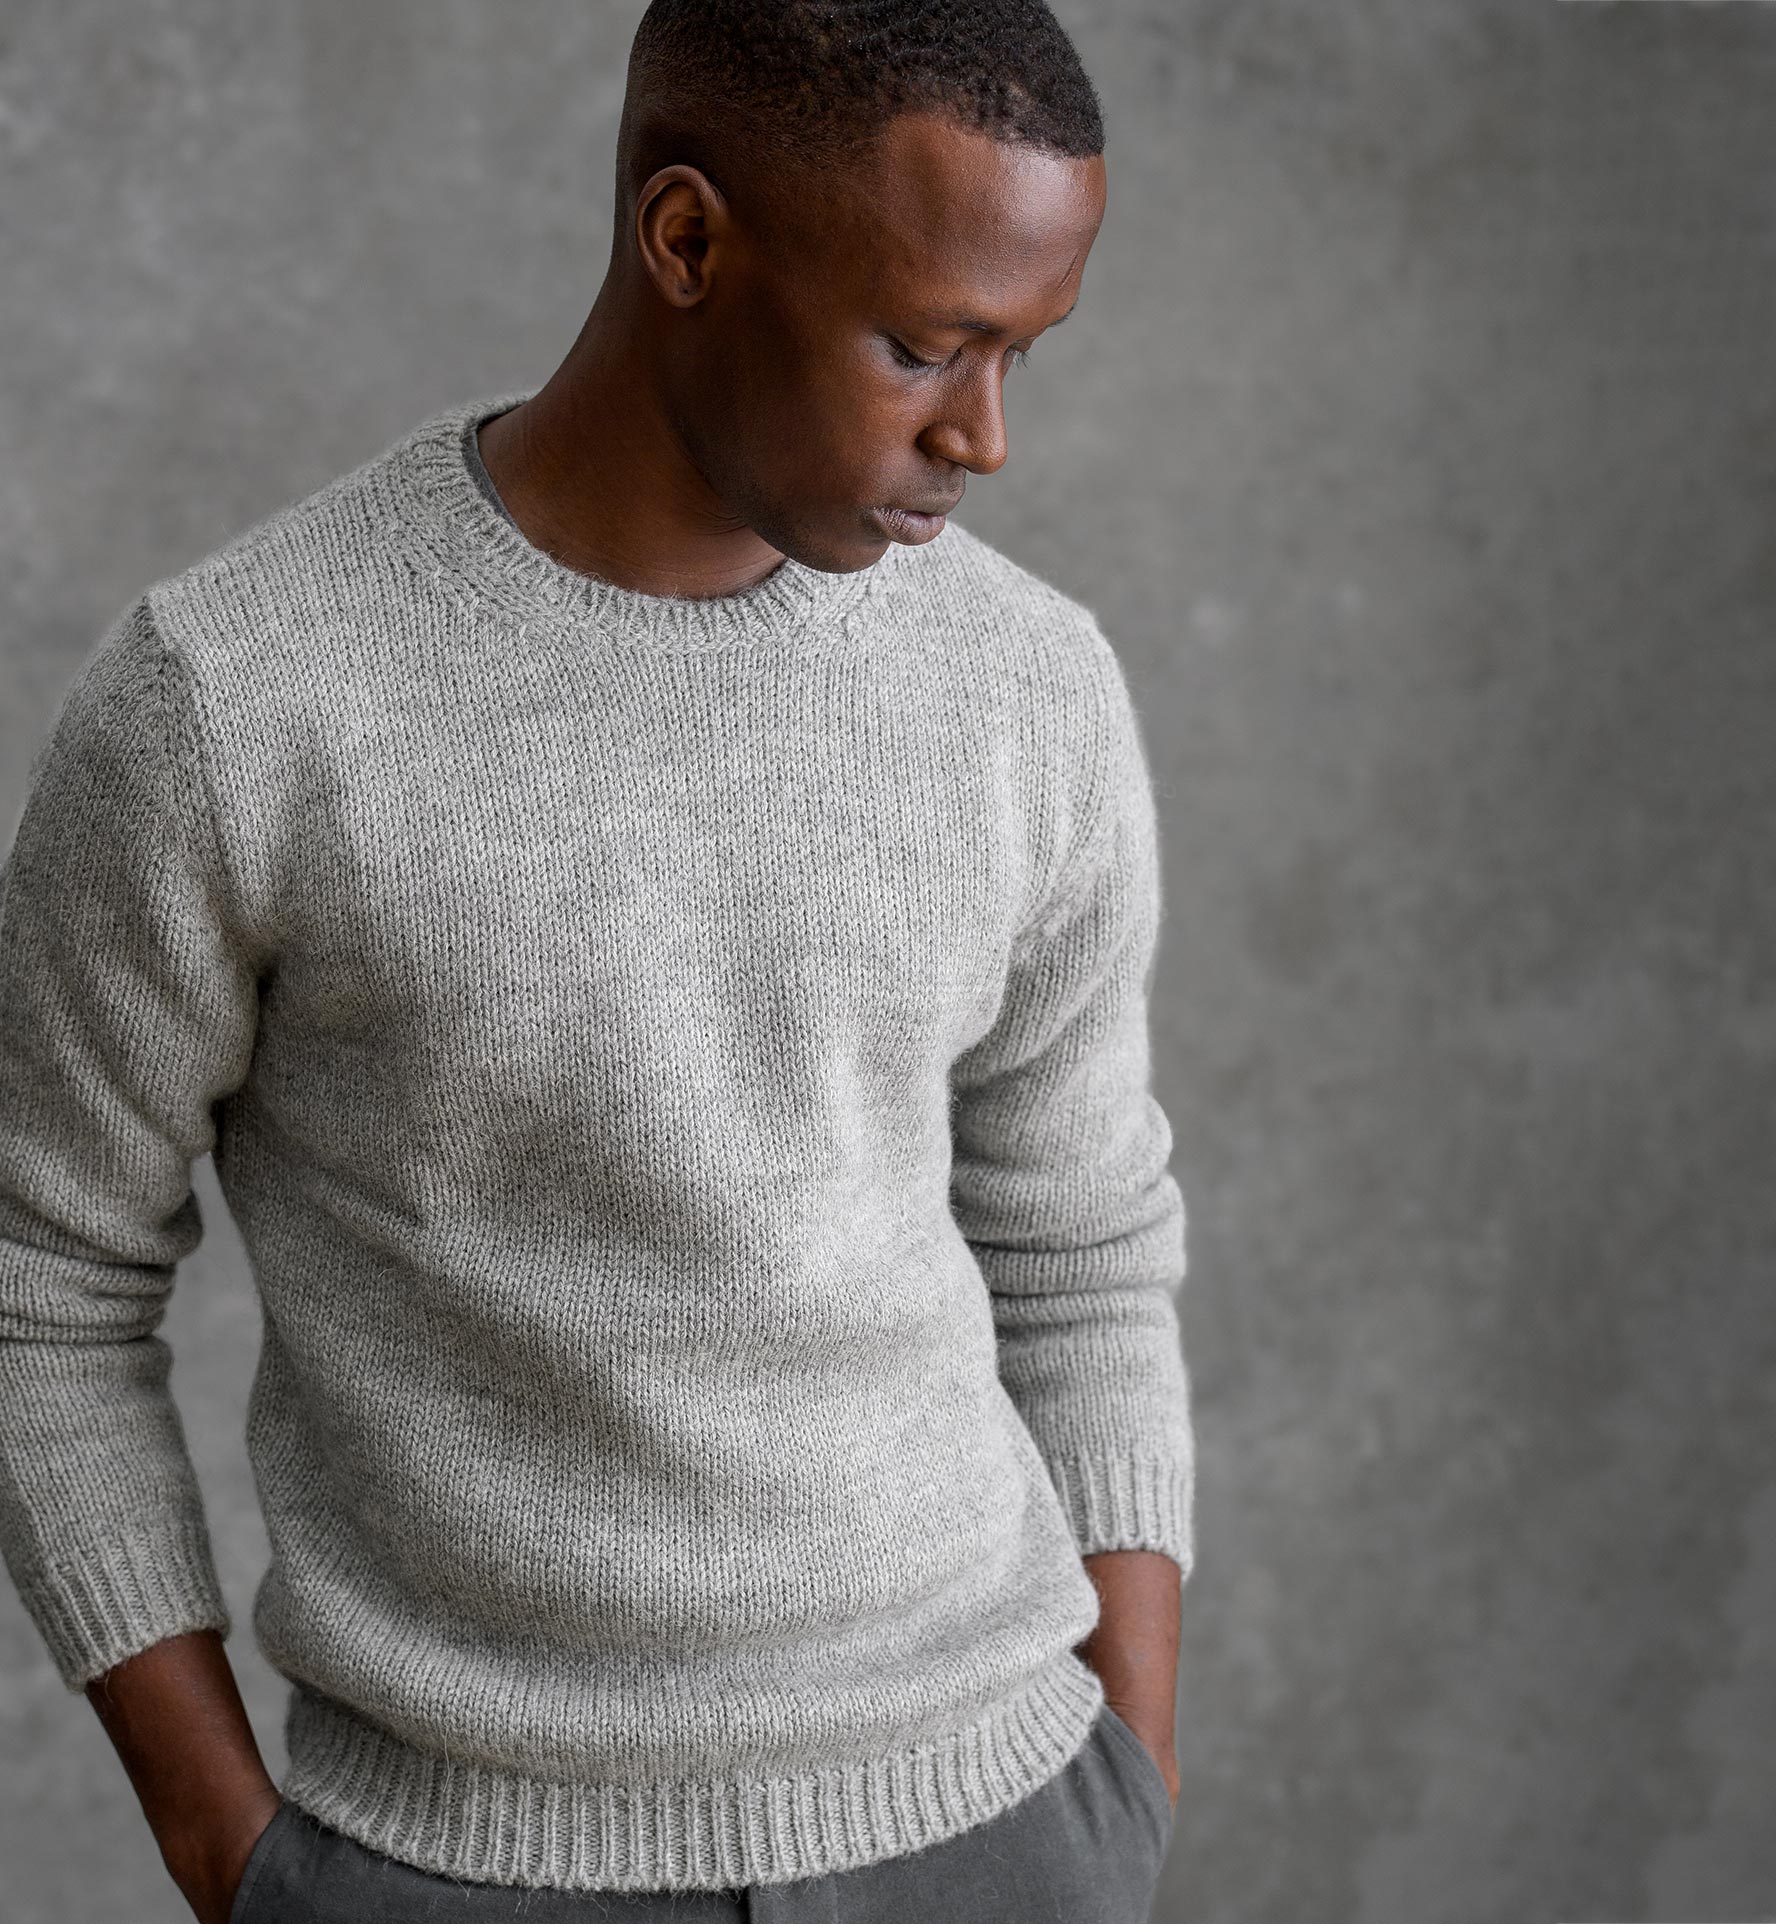 Grey Wool and Alpaca Heavy Crewneck Sweater by Proper Cloth